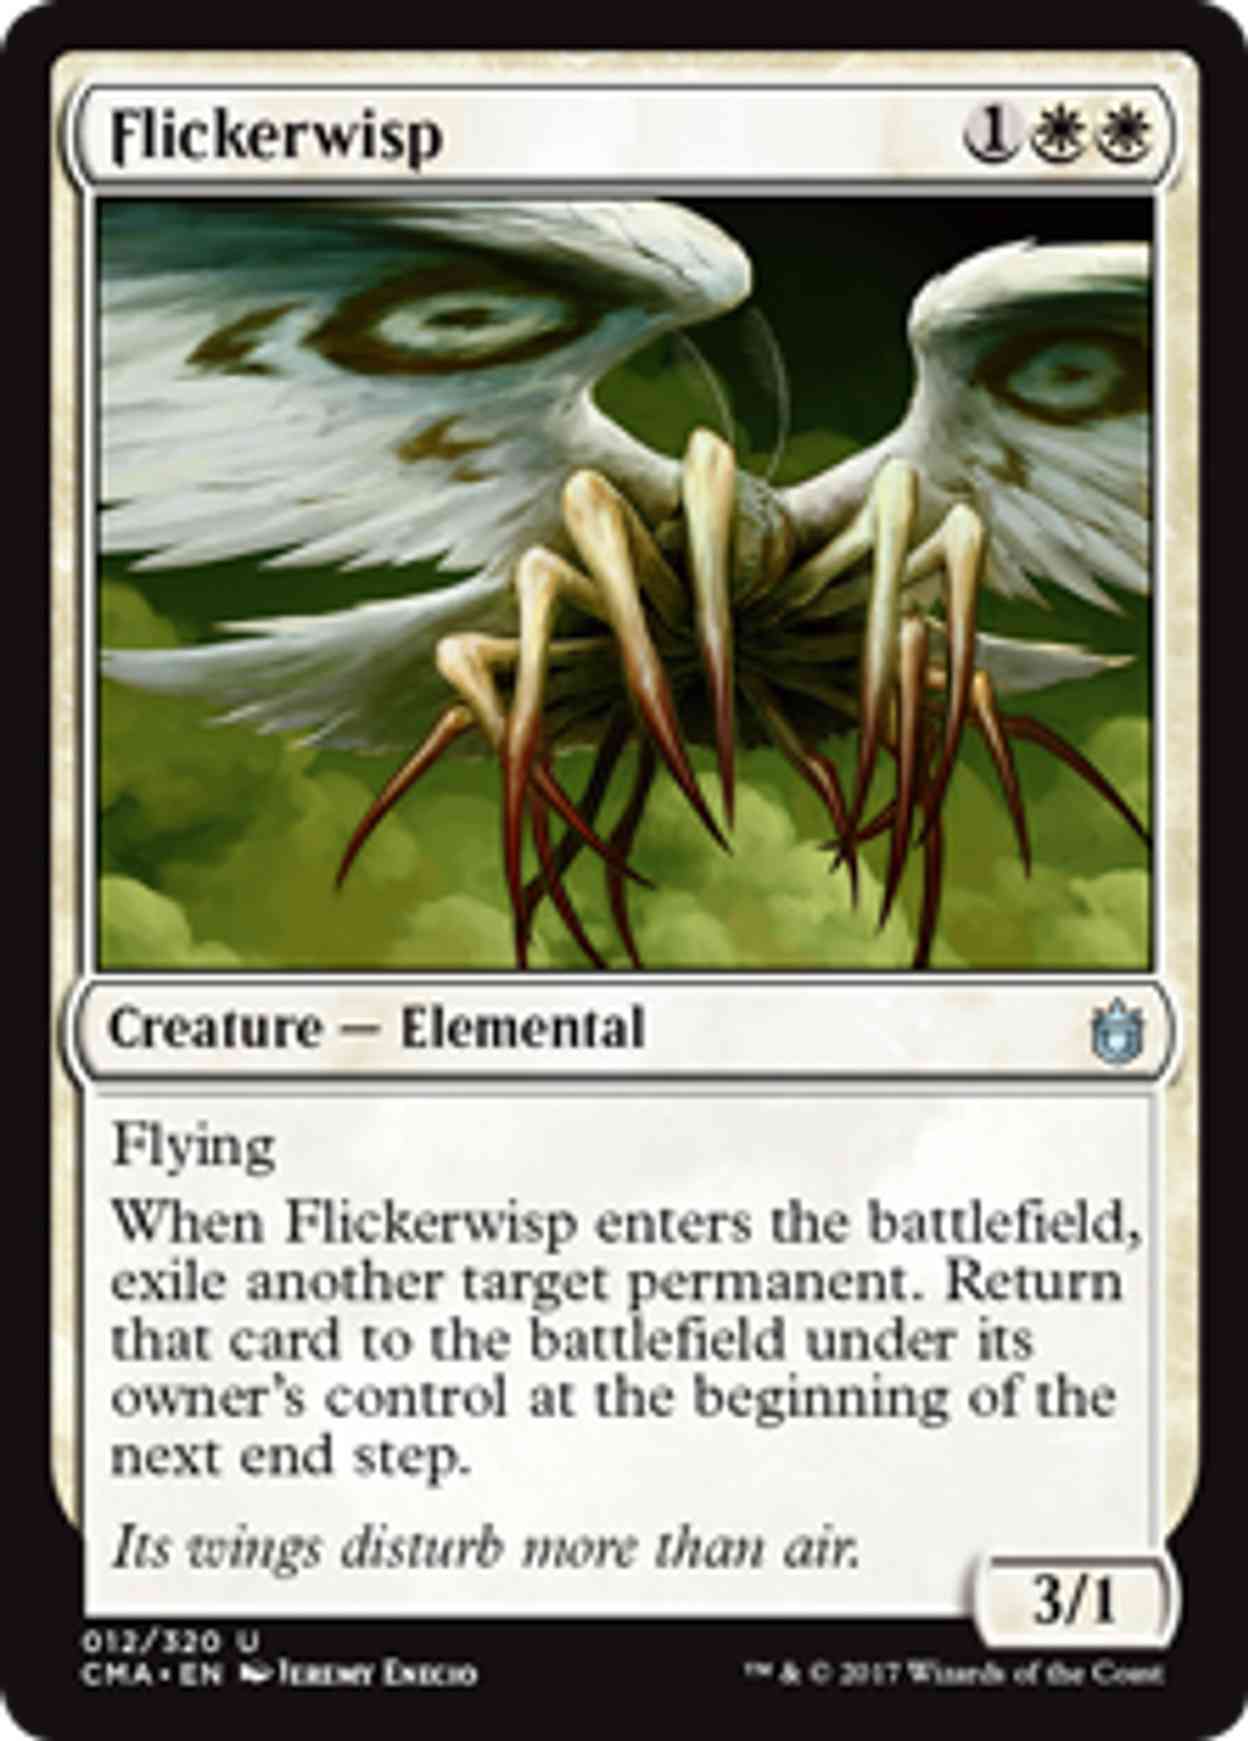 Flickerwisp magic card front